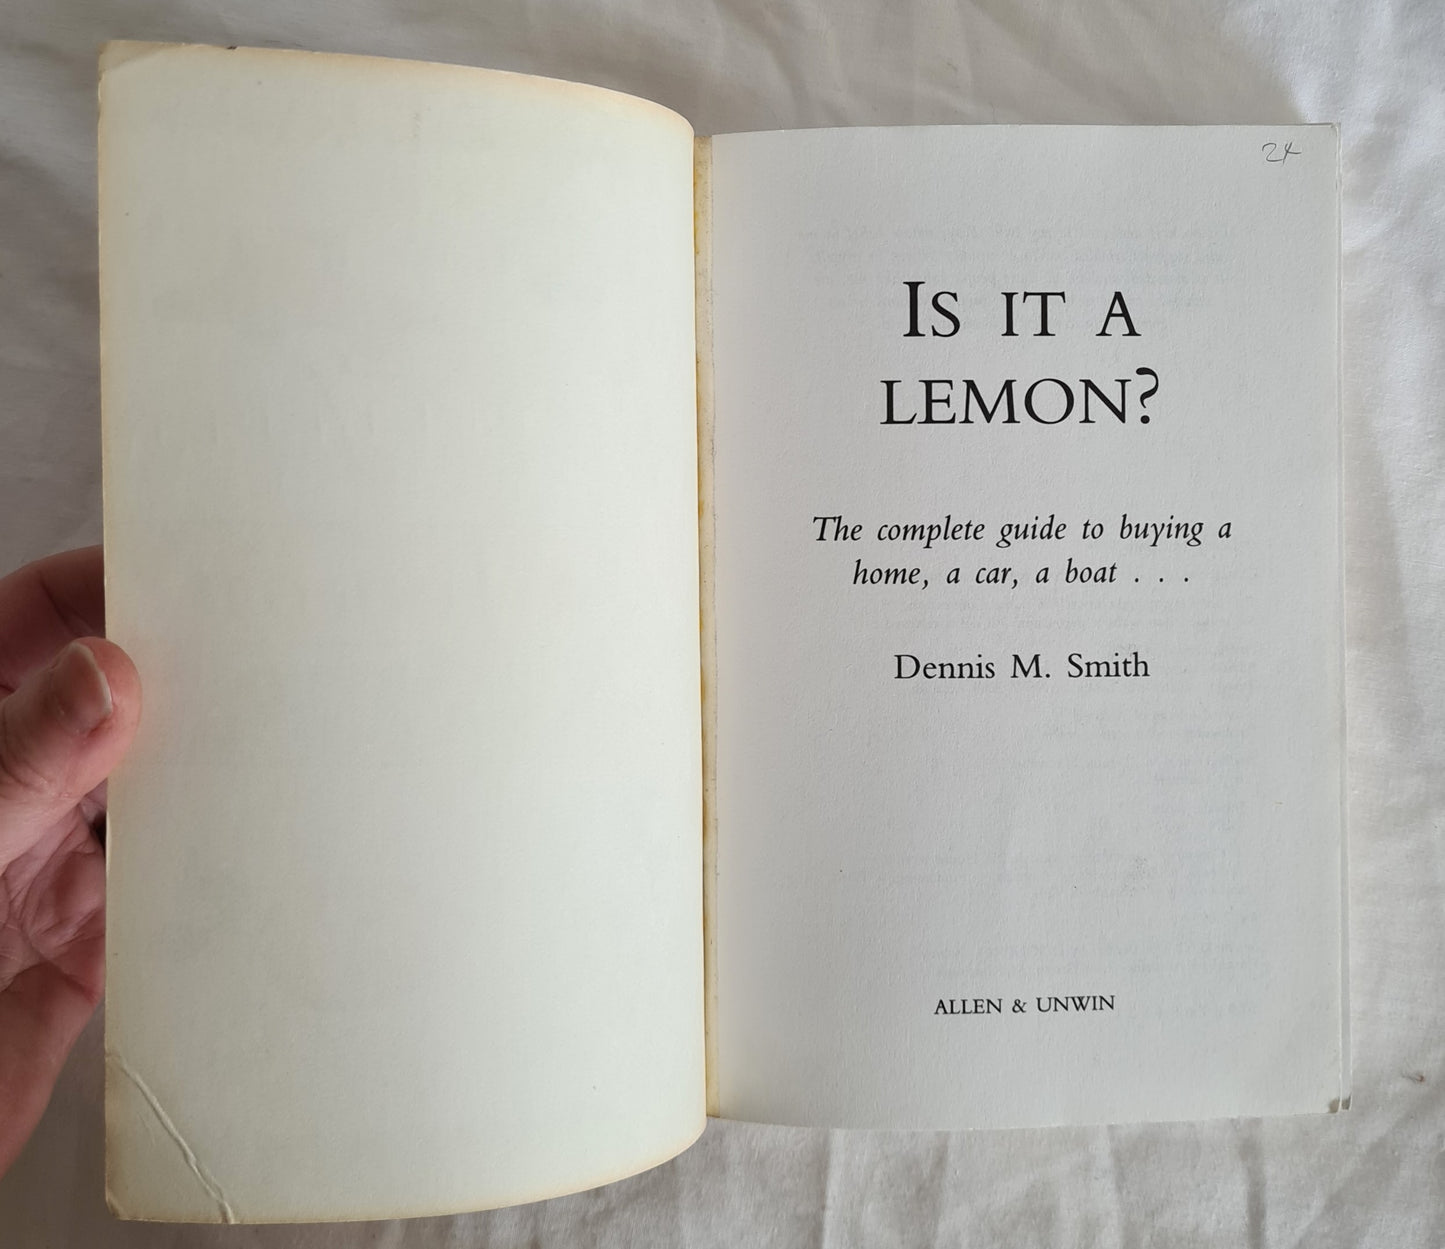 Is It A Lemon? by Dennis M. Smith